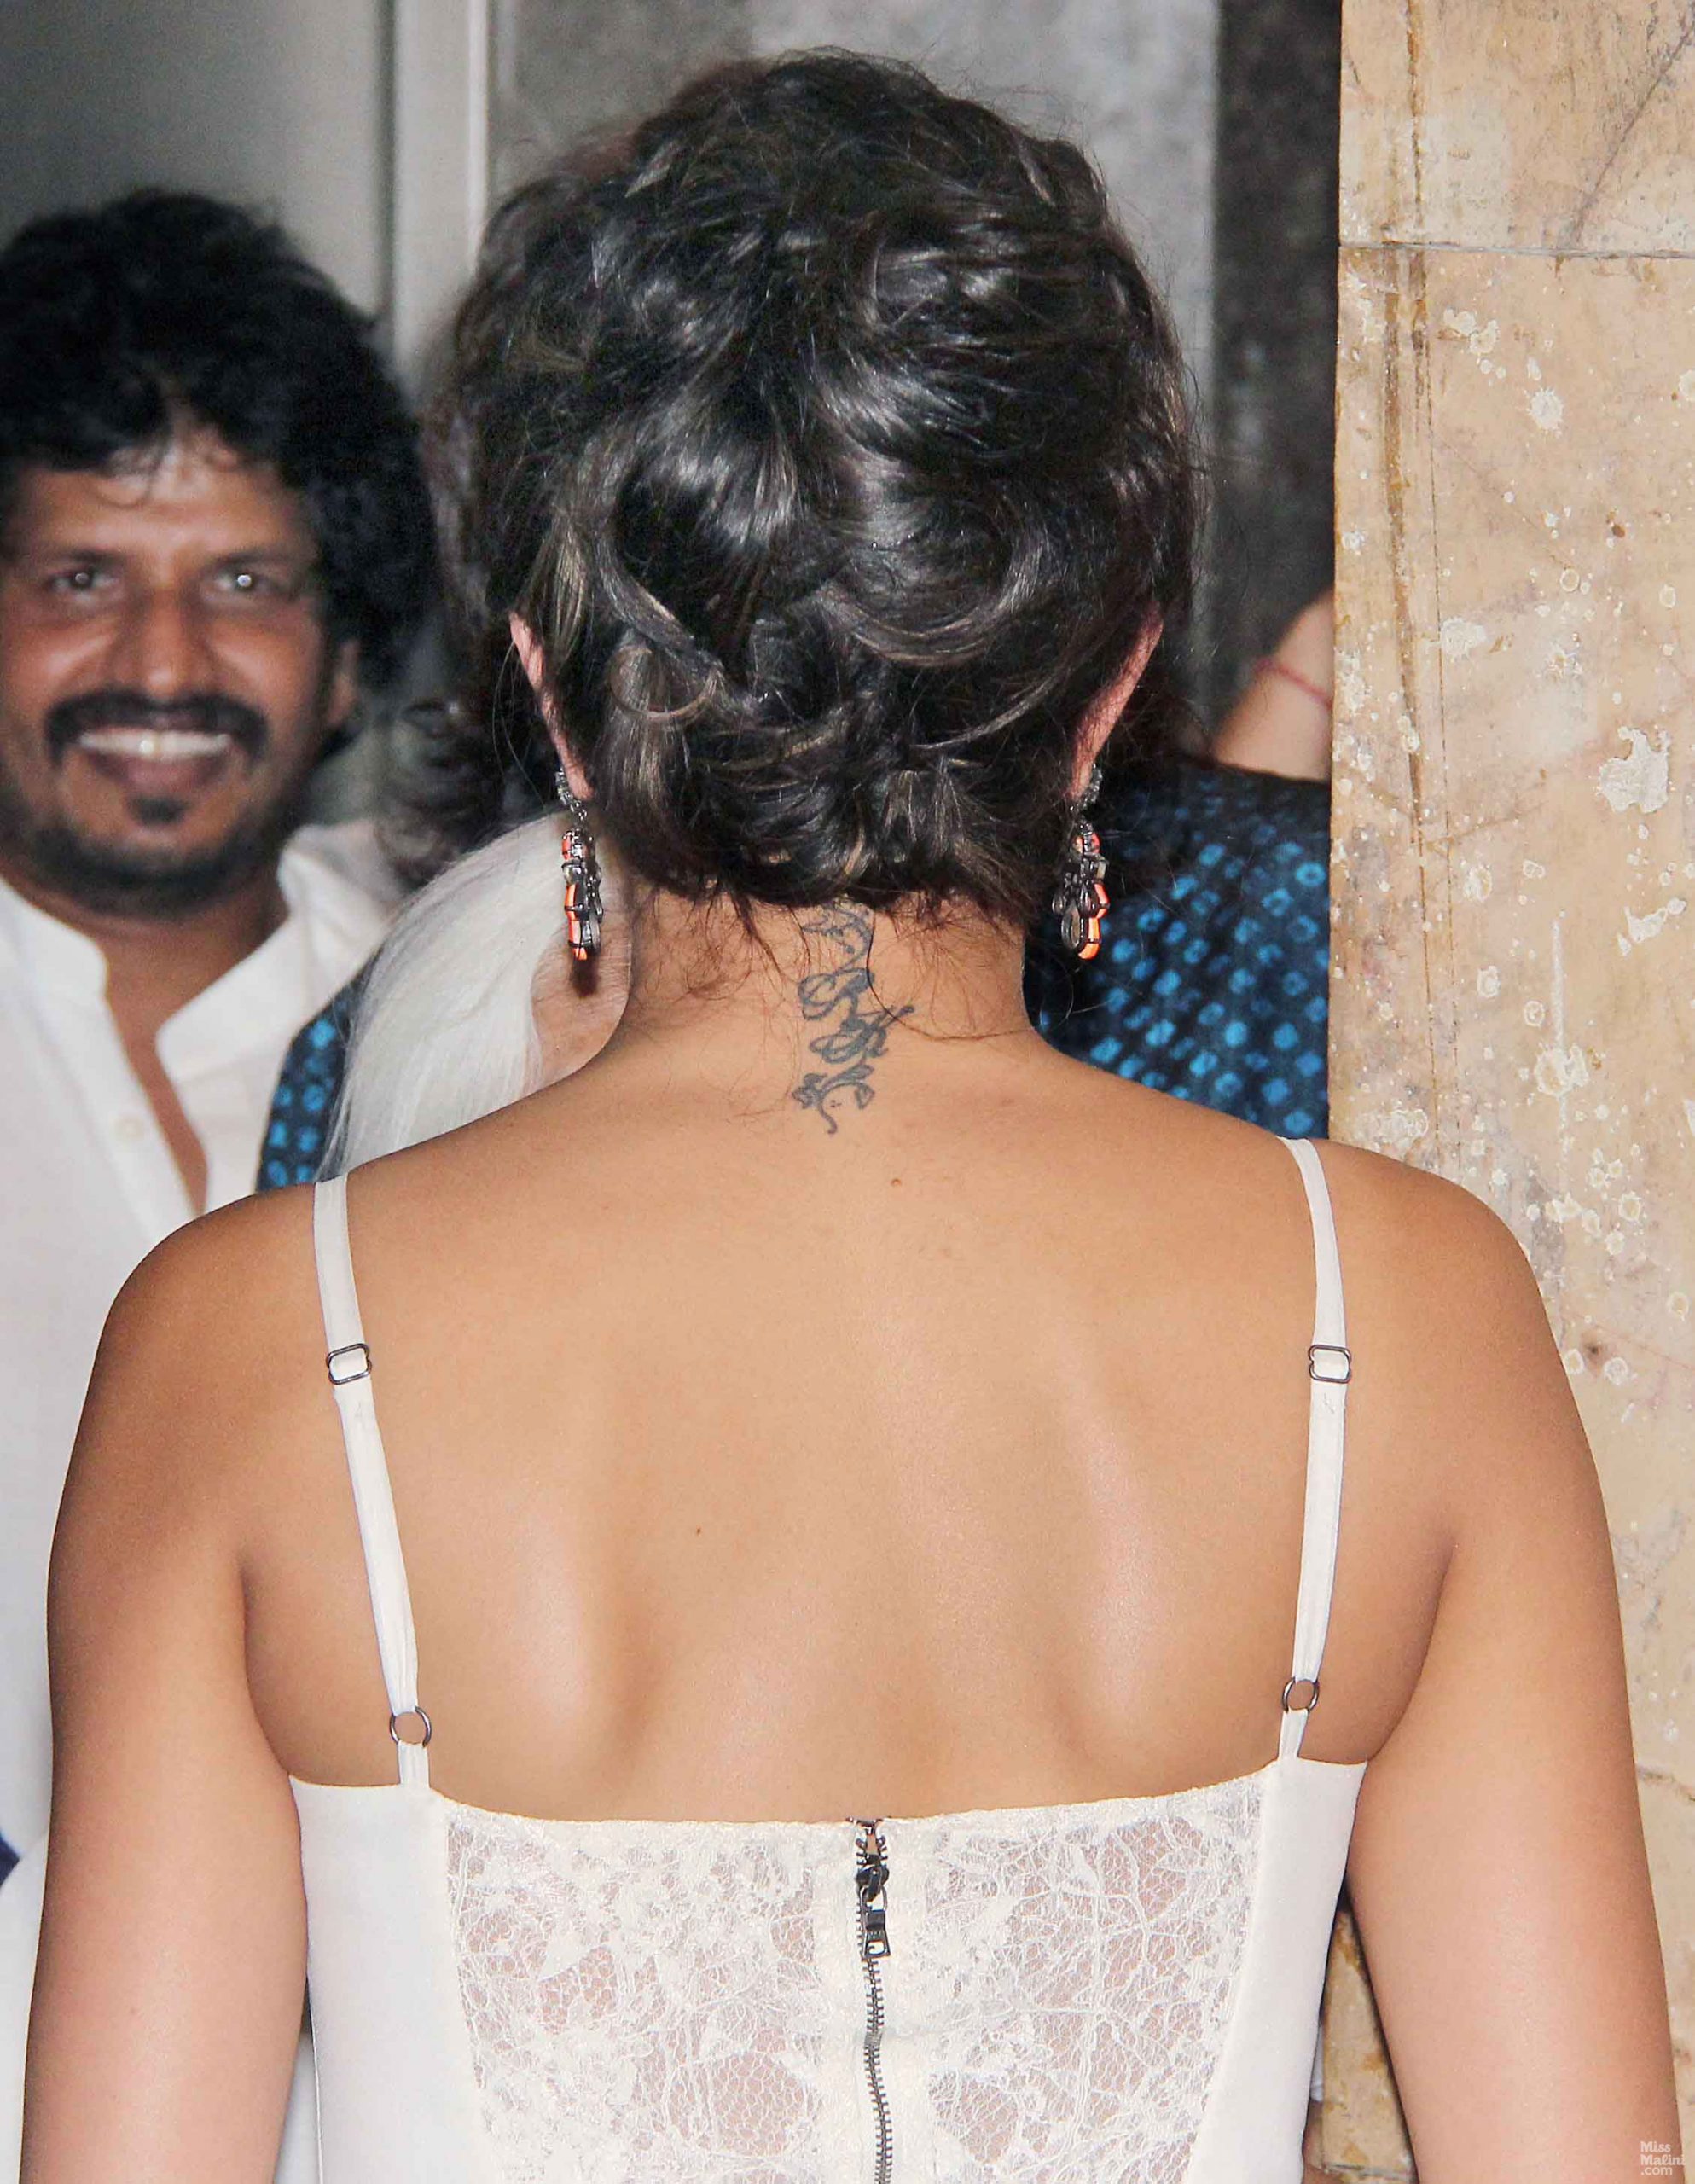 Deepika Padukone's tattoo